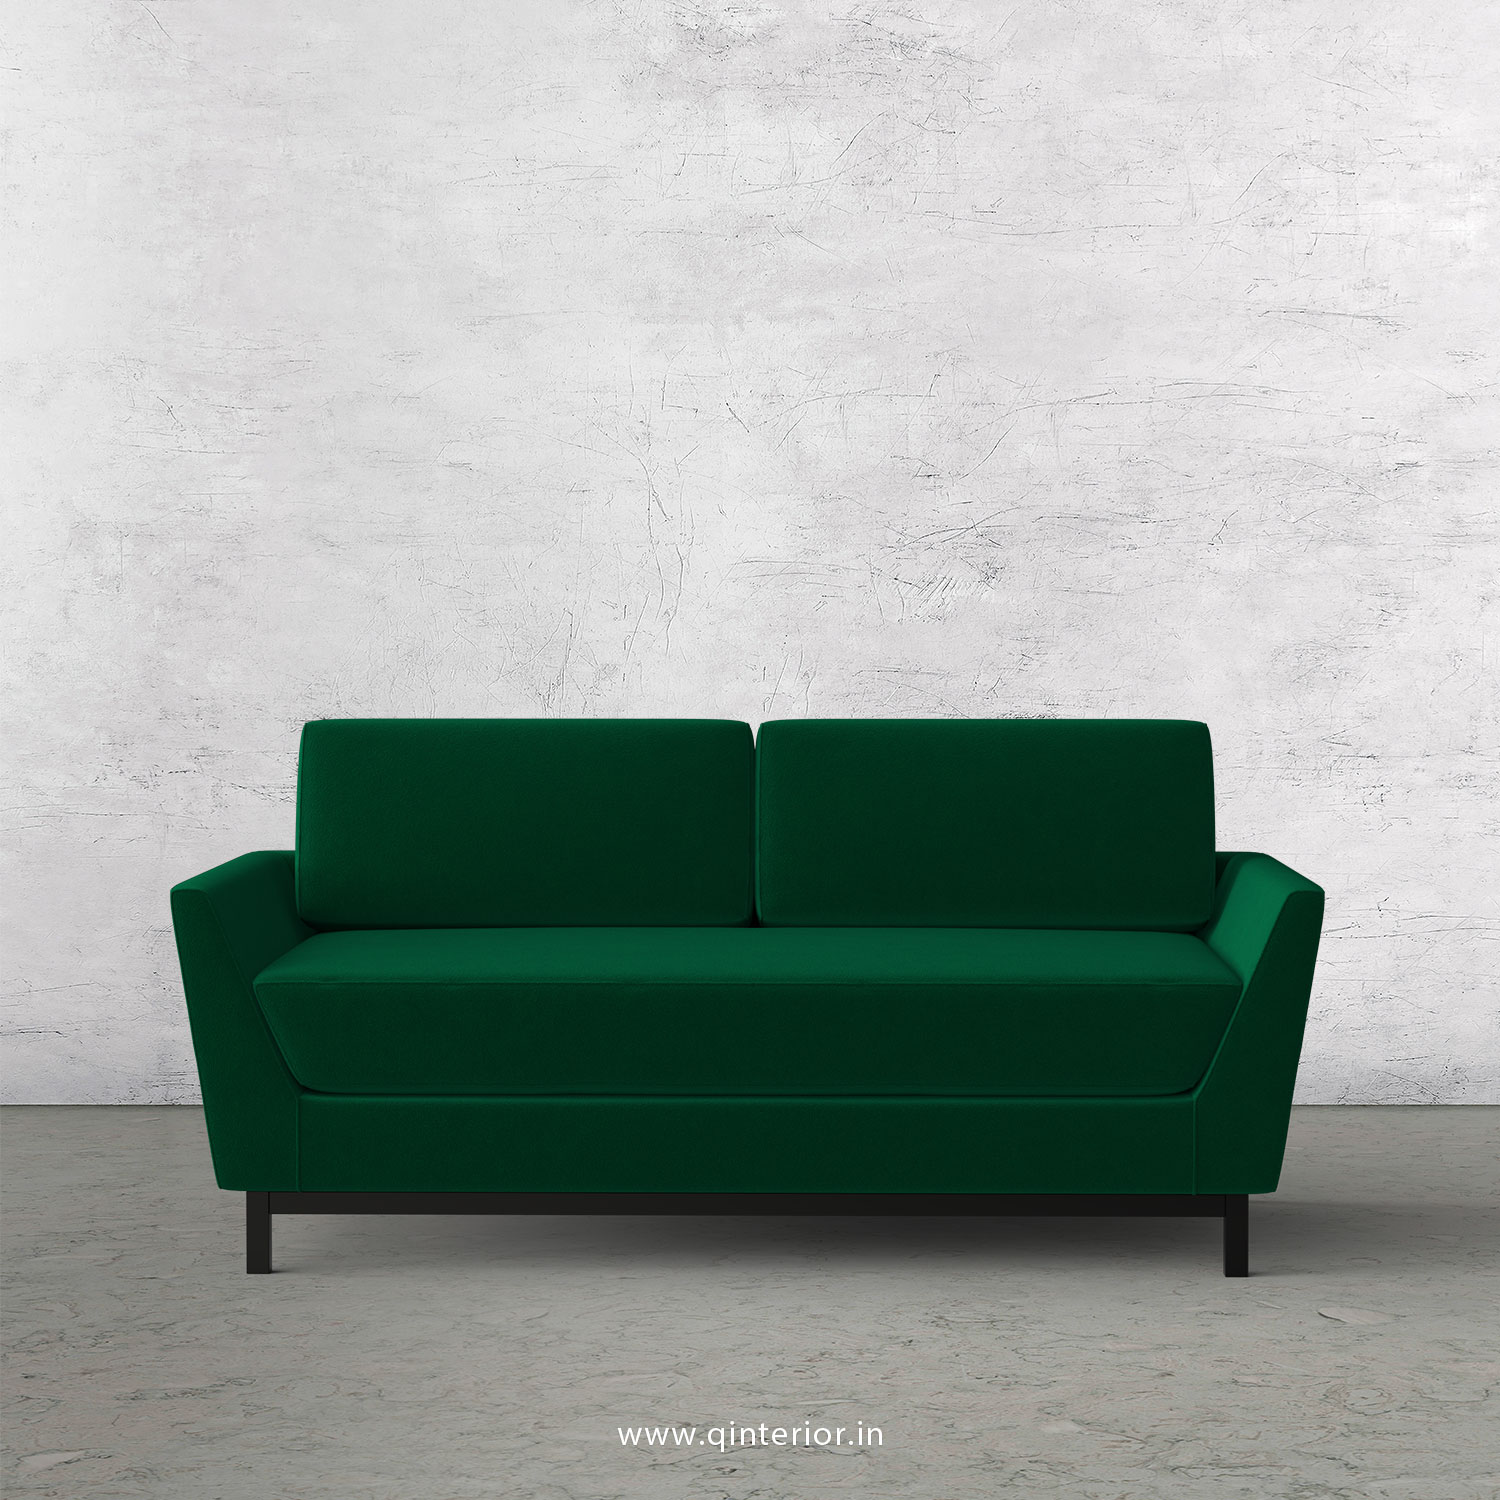 Blitz 2 Seater Sofa in Velvet Fabric - SFA002 VL17